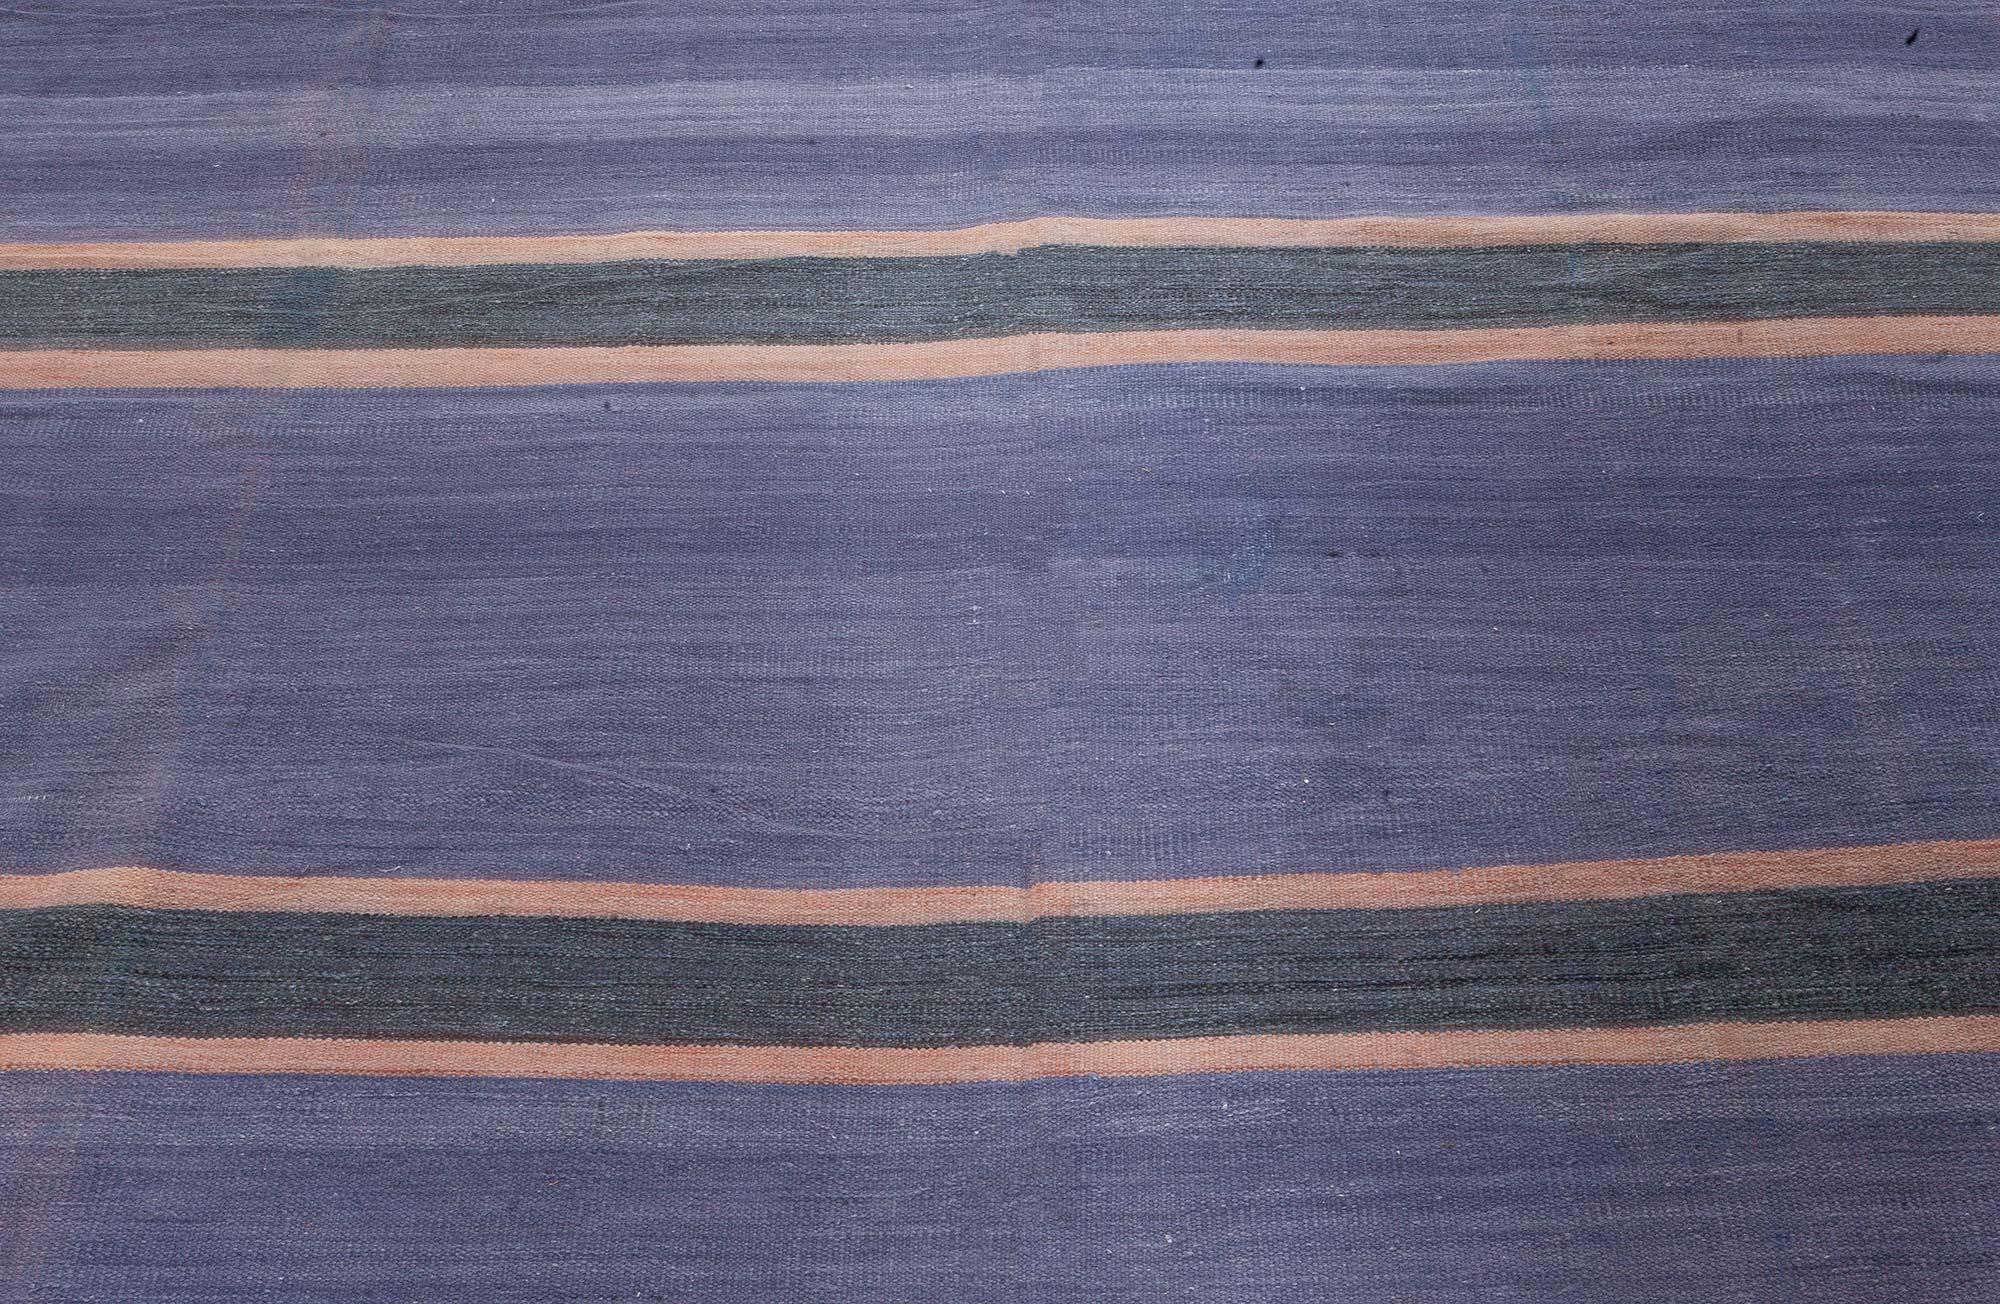 Vintage Indian Dhurrie striped purple rug
Size: 13'4